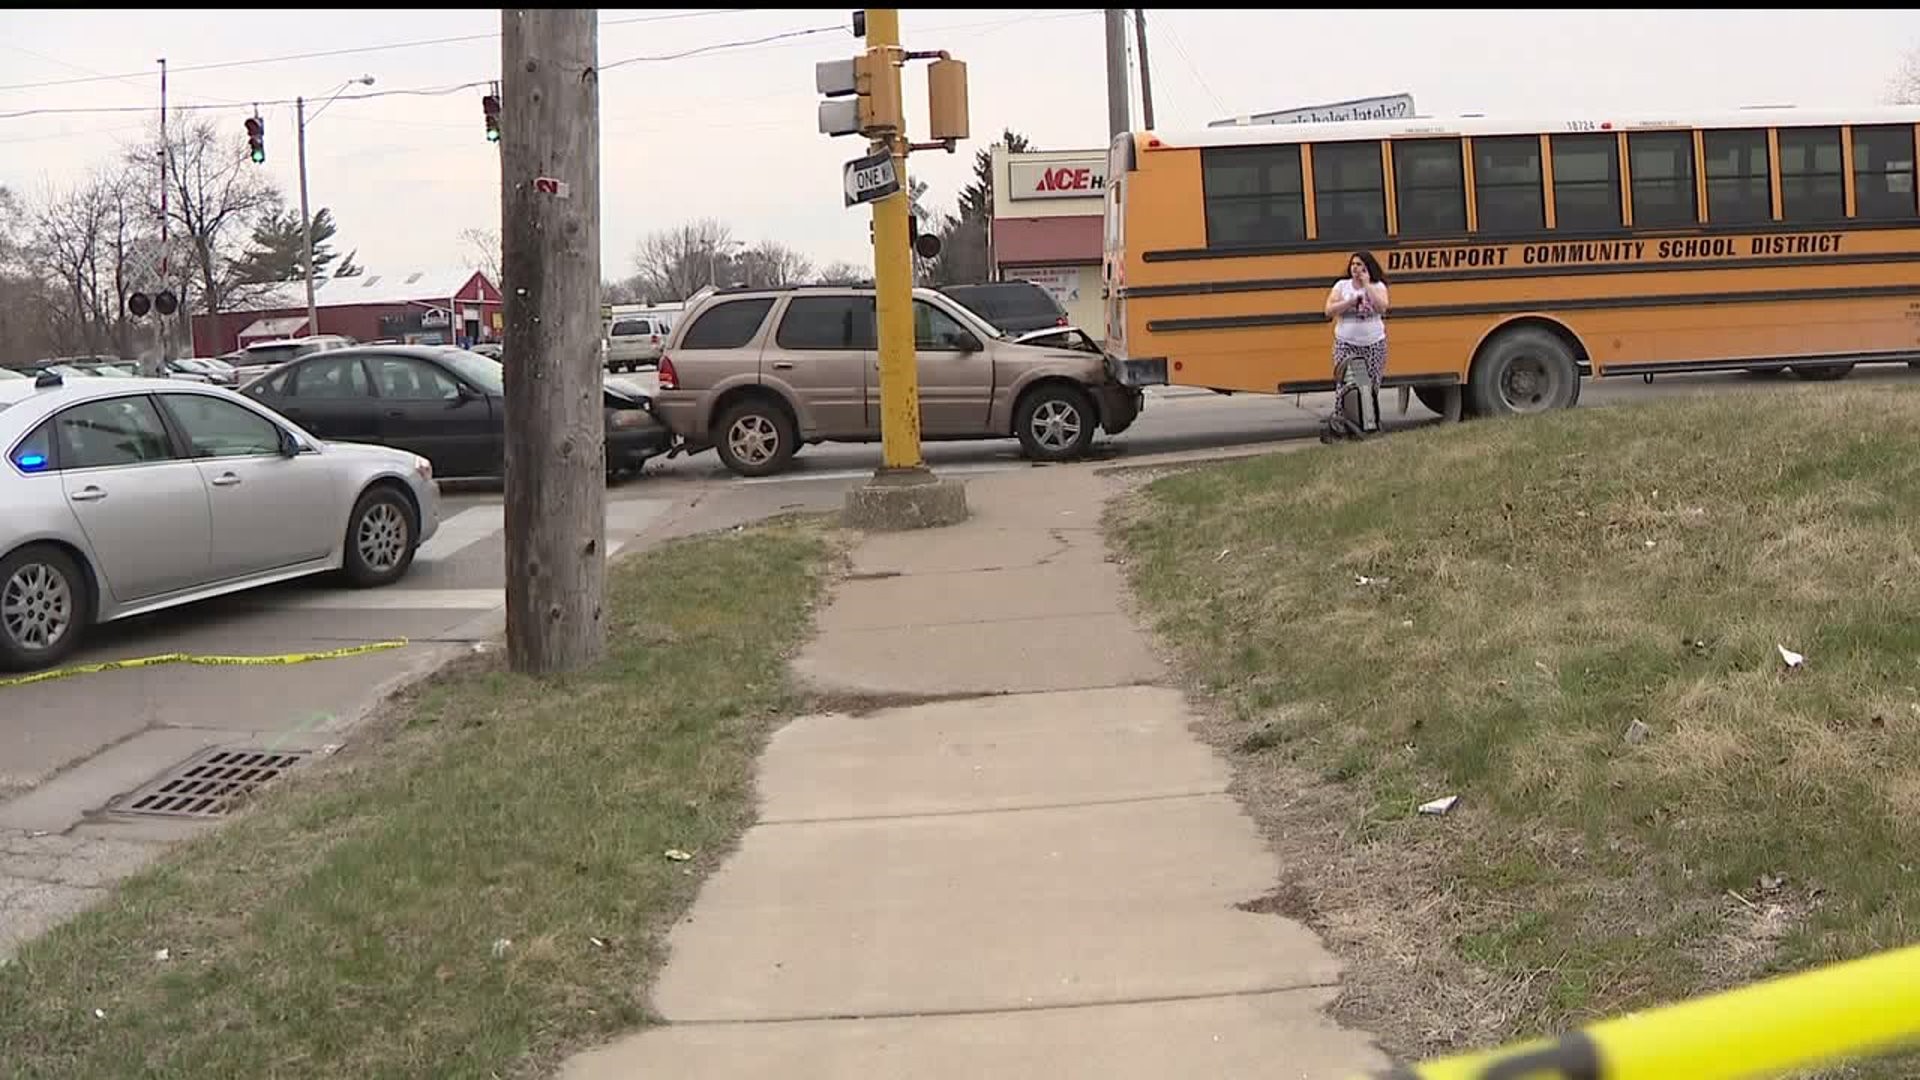 School bus involved in a crash